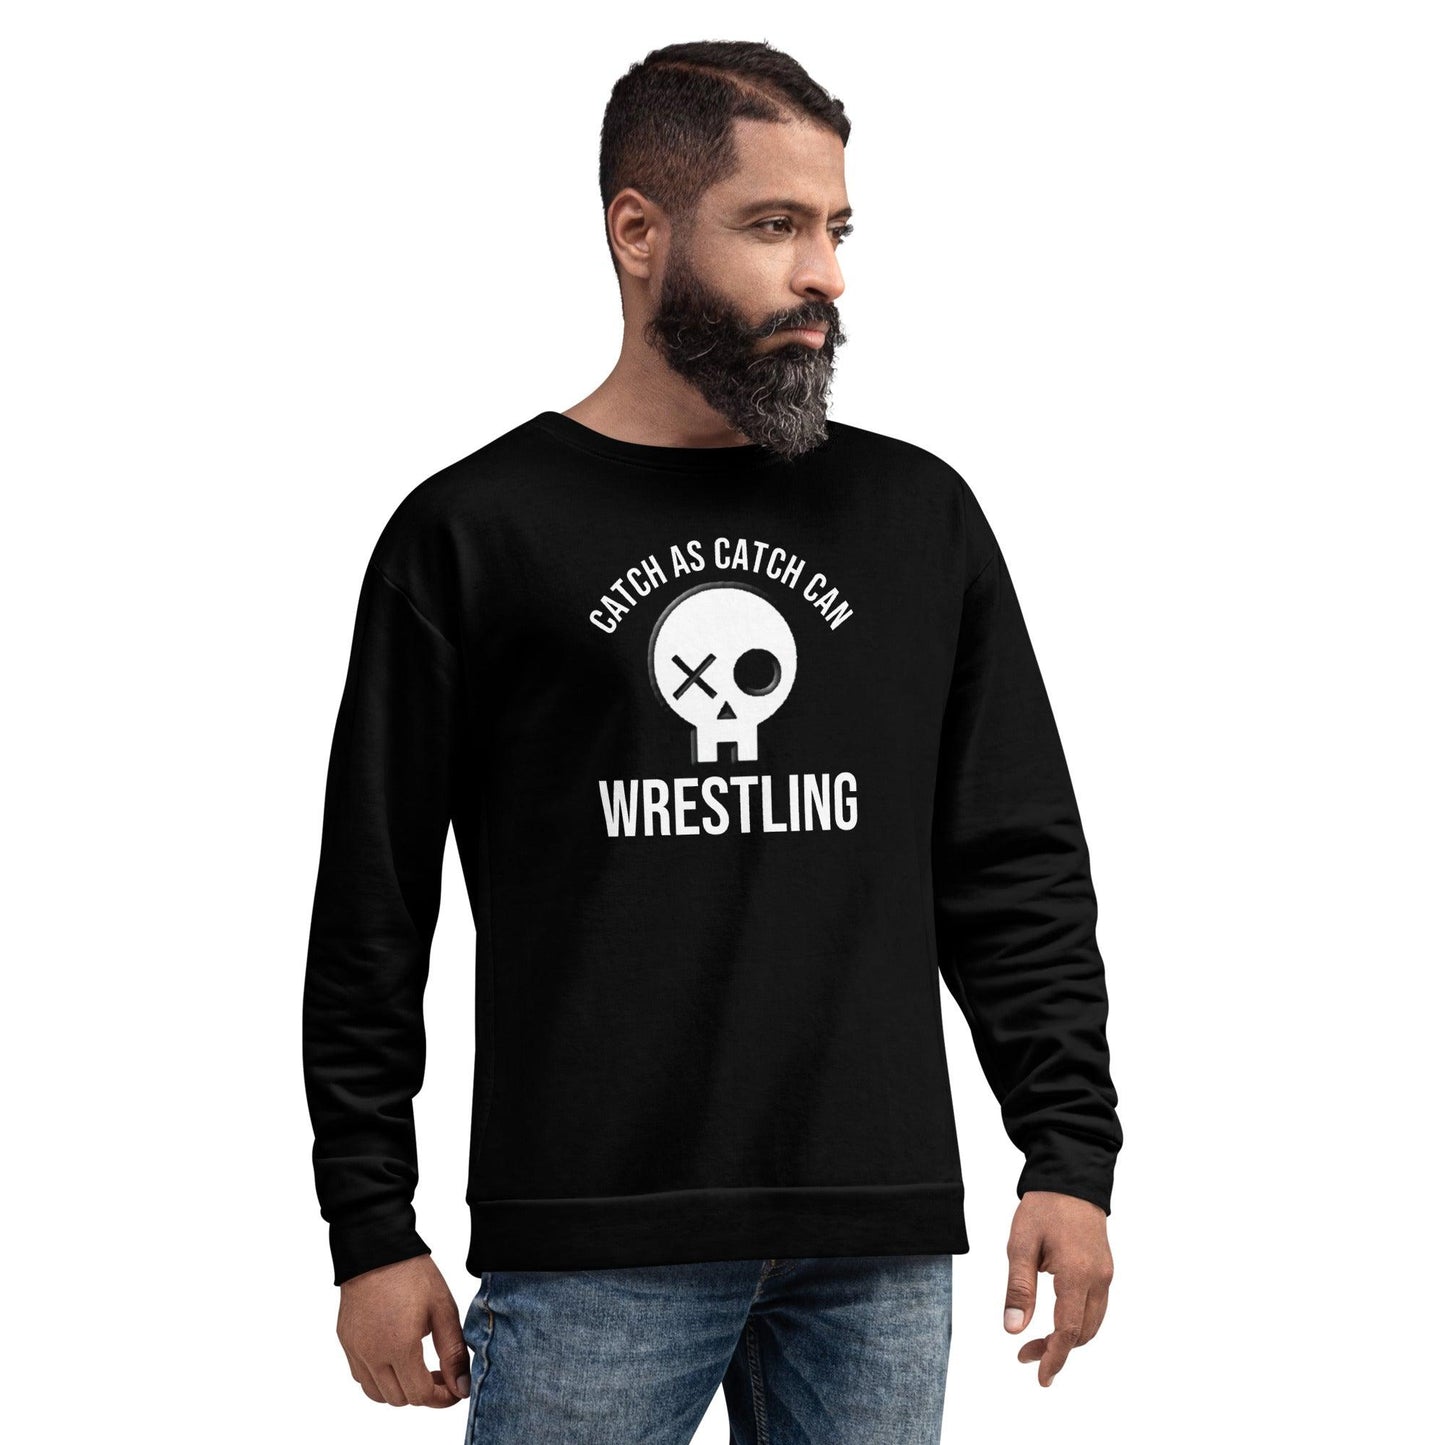 Catch Wrestling Unisex Sweatshirt - Black - Violent Art Shop